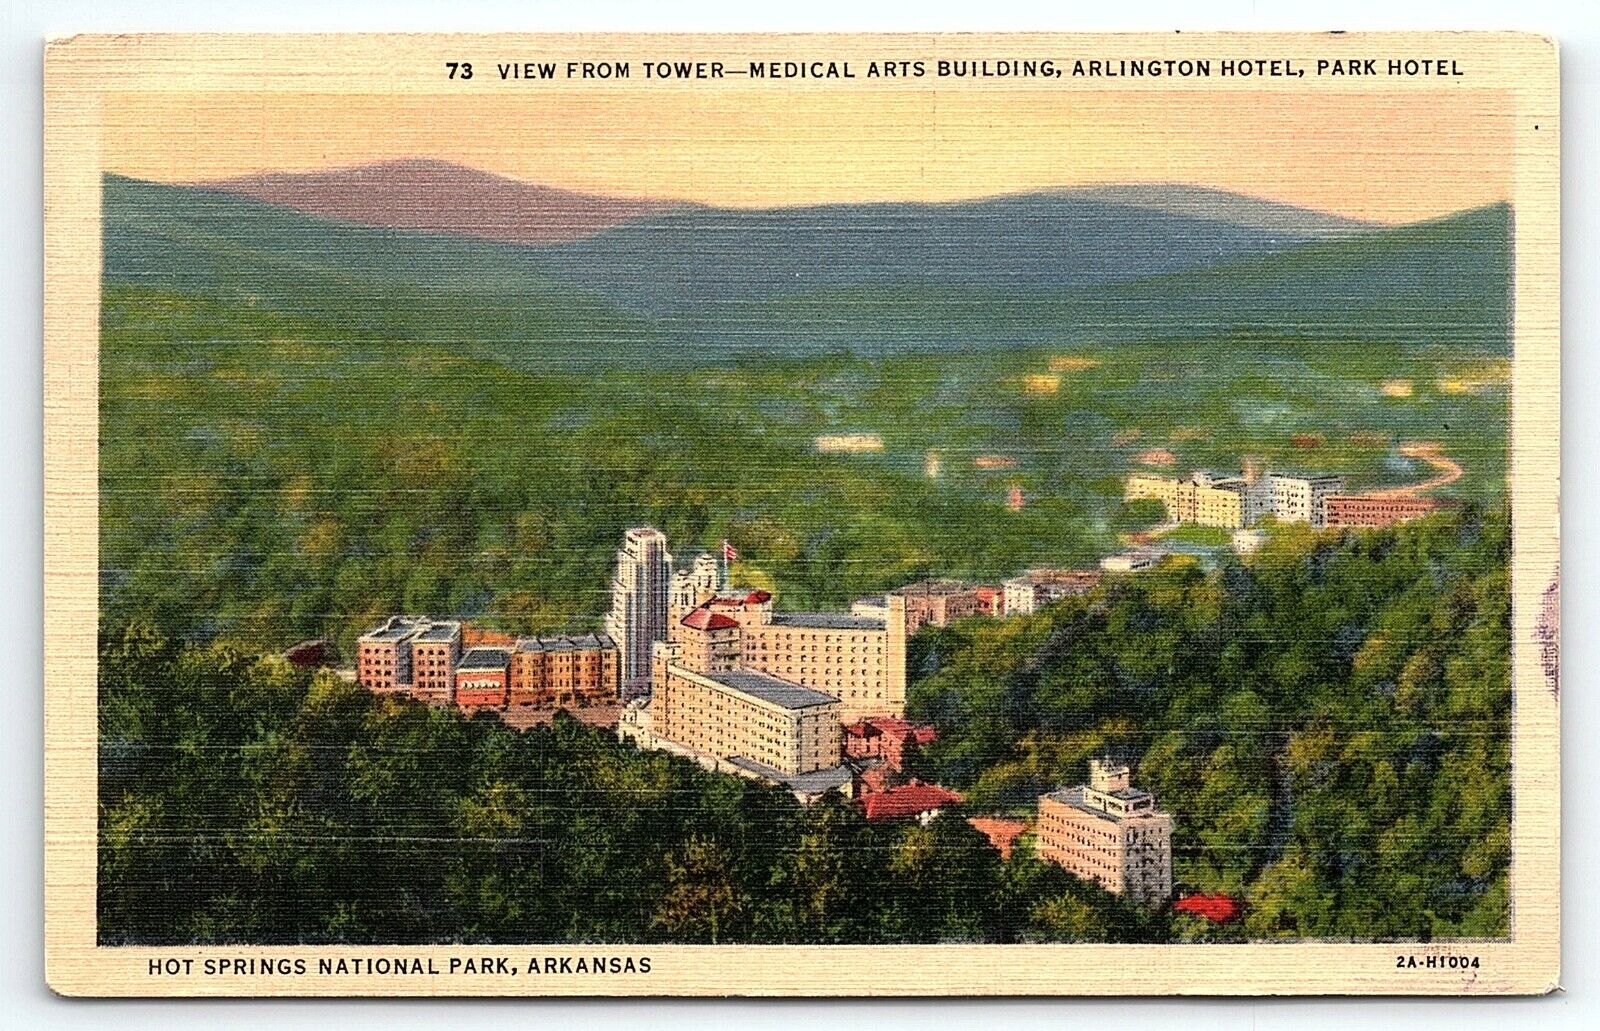 1938 HOT SPRINGS ARKANSAS ARLINGTON HOTEL PARK HOTEL AERIAL VIEW POSTCARD P1602